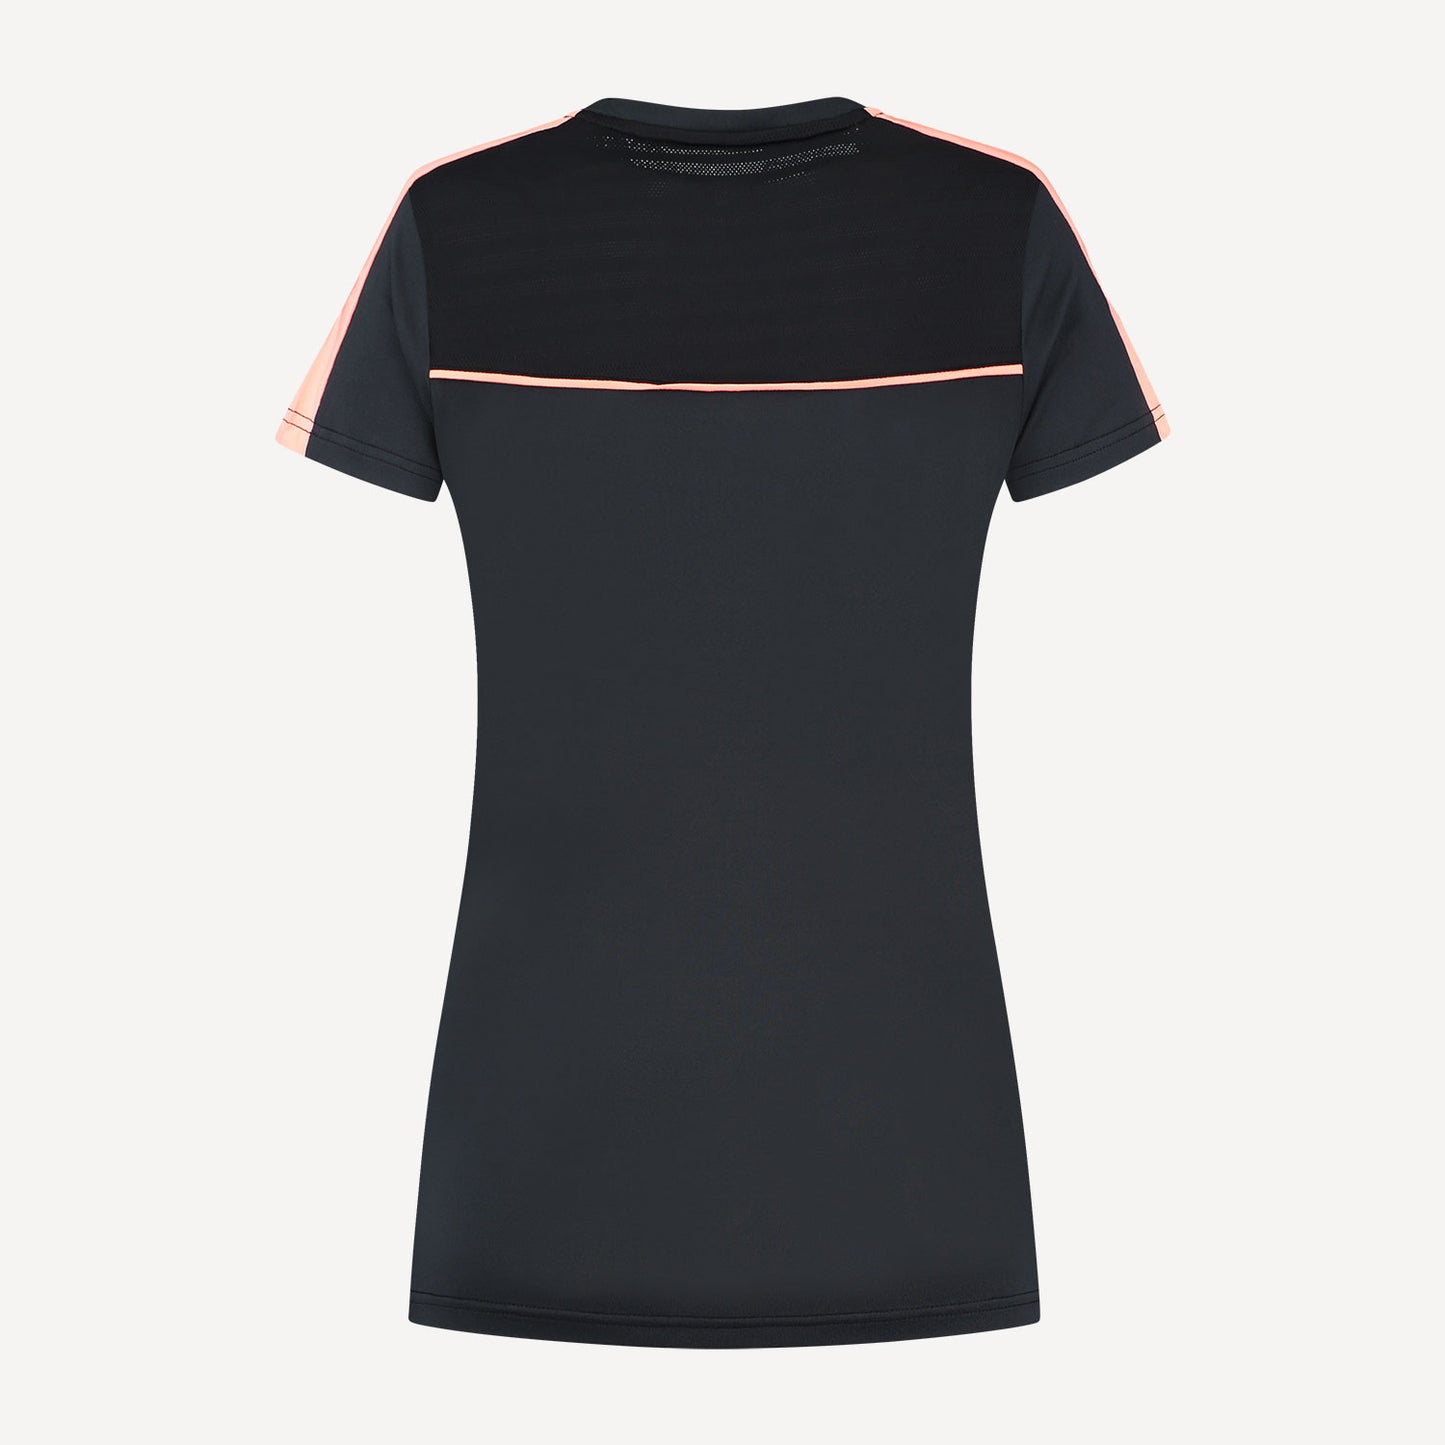 K-Swiss Hypercourt Women's Round Neck Tennis Shirt Black (2)